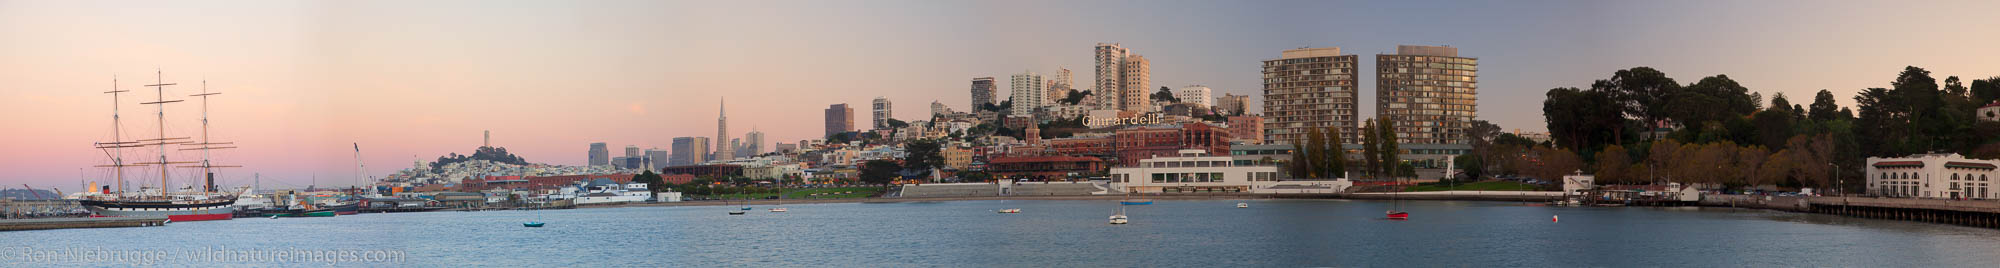 Panoramic view of the San Francisco skyline from across Aquatic Park lagoon, San Francisco, CA